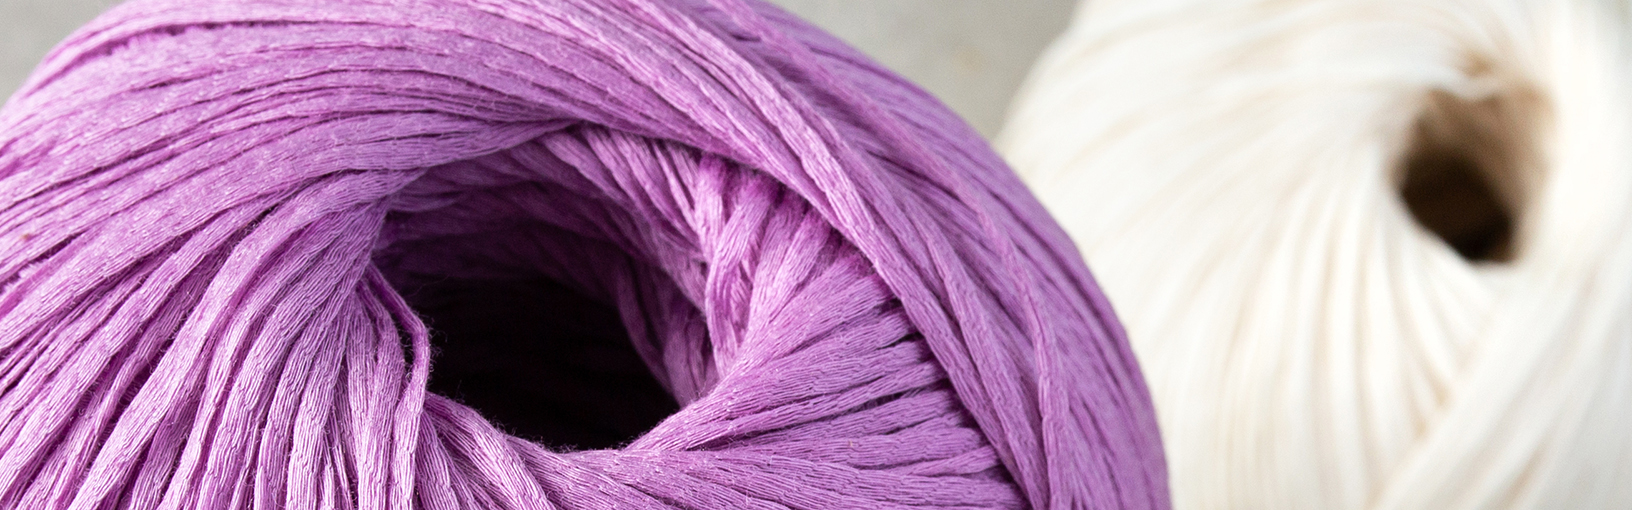 High quality yarns for knitting, crocheting & felting Lana Grossa Yarns | Sock yarns | 6-ply